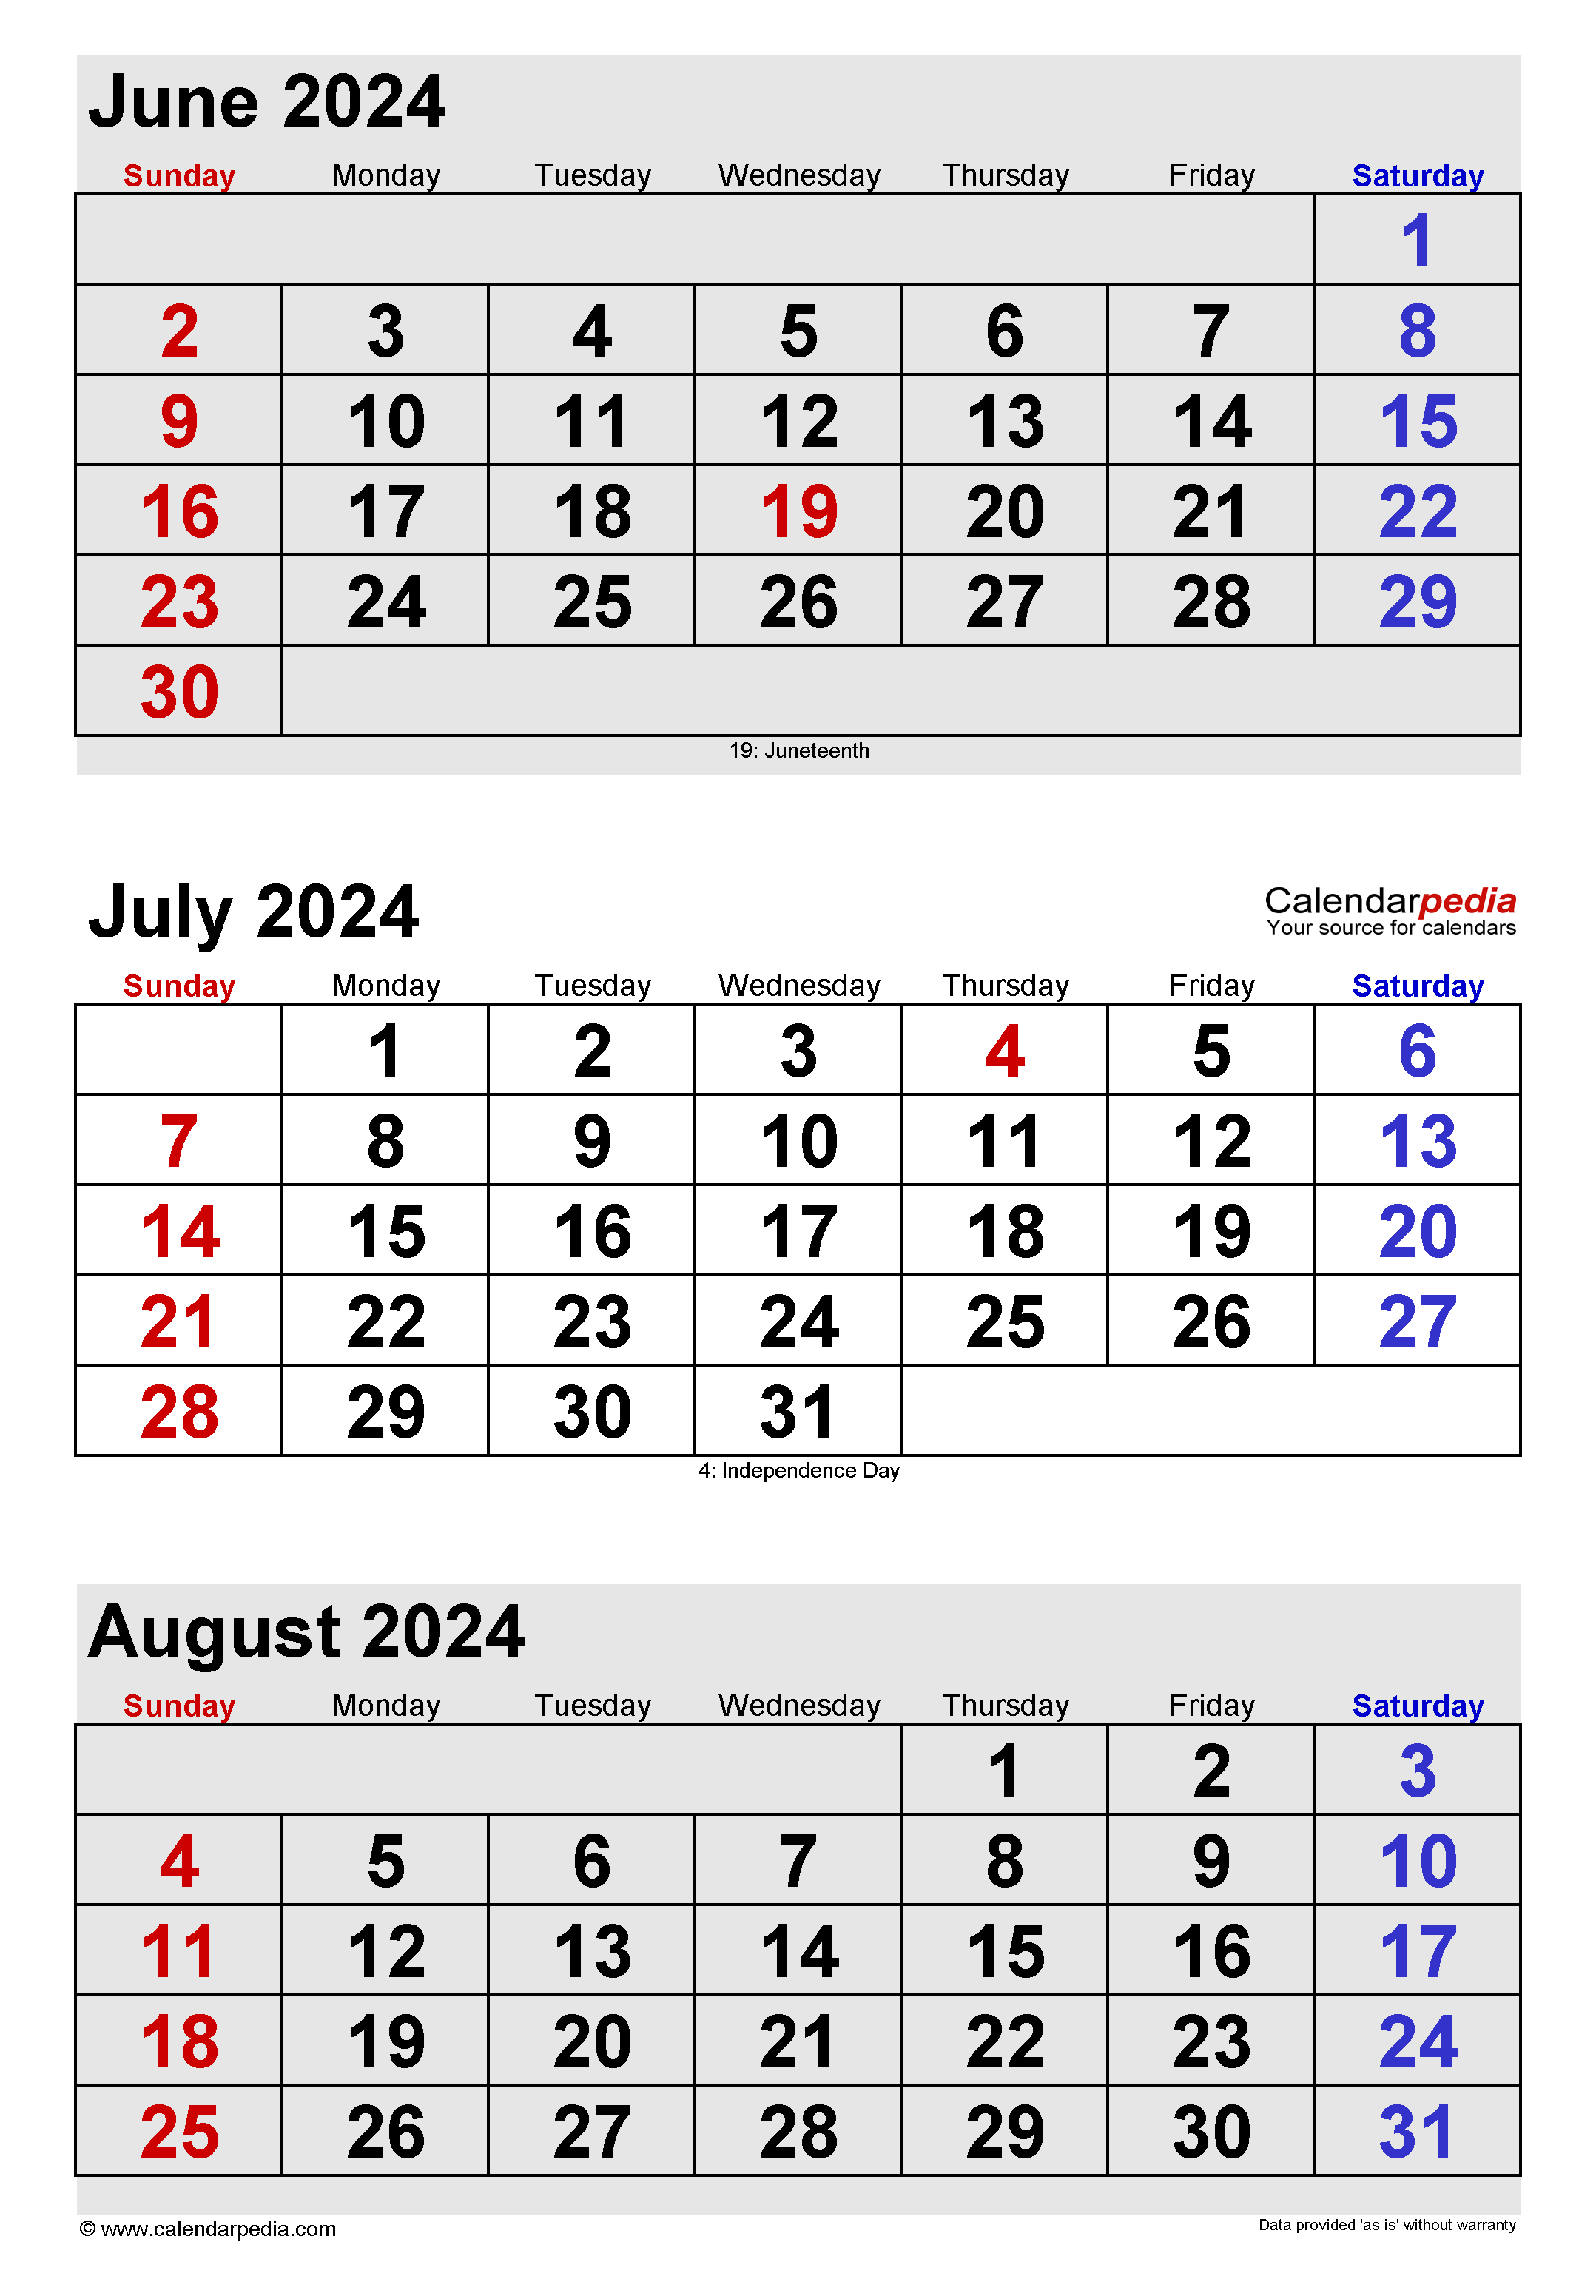 August 2024 July 2024 Calendar Printable 2024 CALENDAR PRINTABLE - Free Printable 2024 Monthly Calendar July